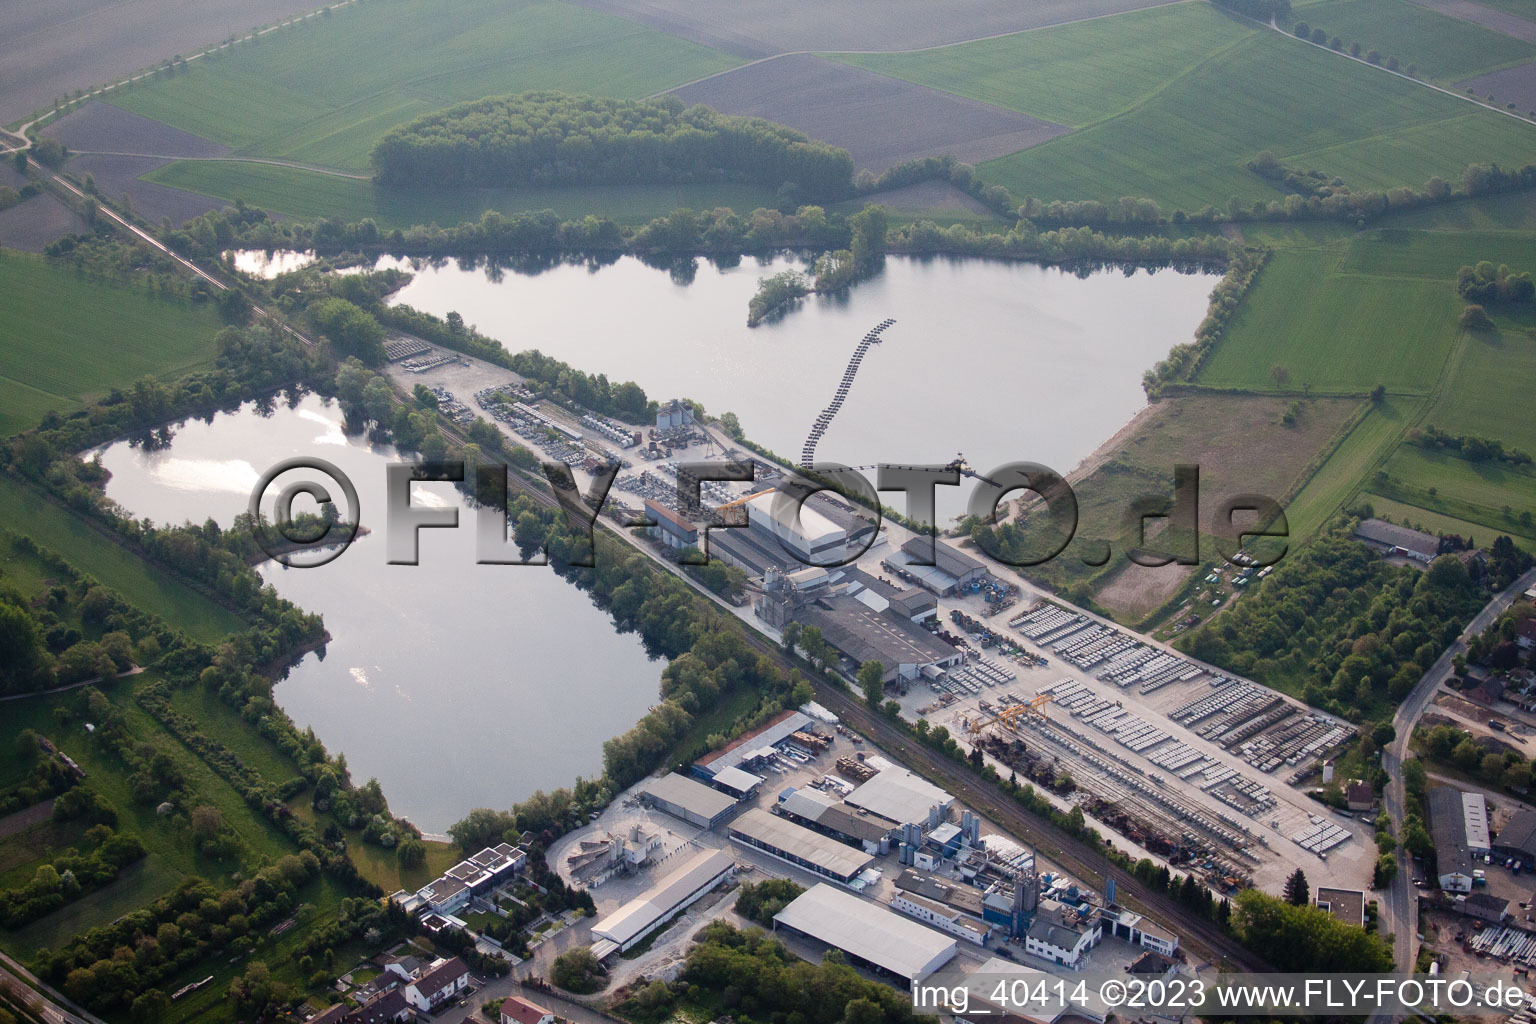 District Rheinsheim in Philippsburg in the state Baden-Wuerttemberg, Germany seen from above